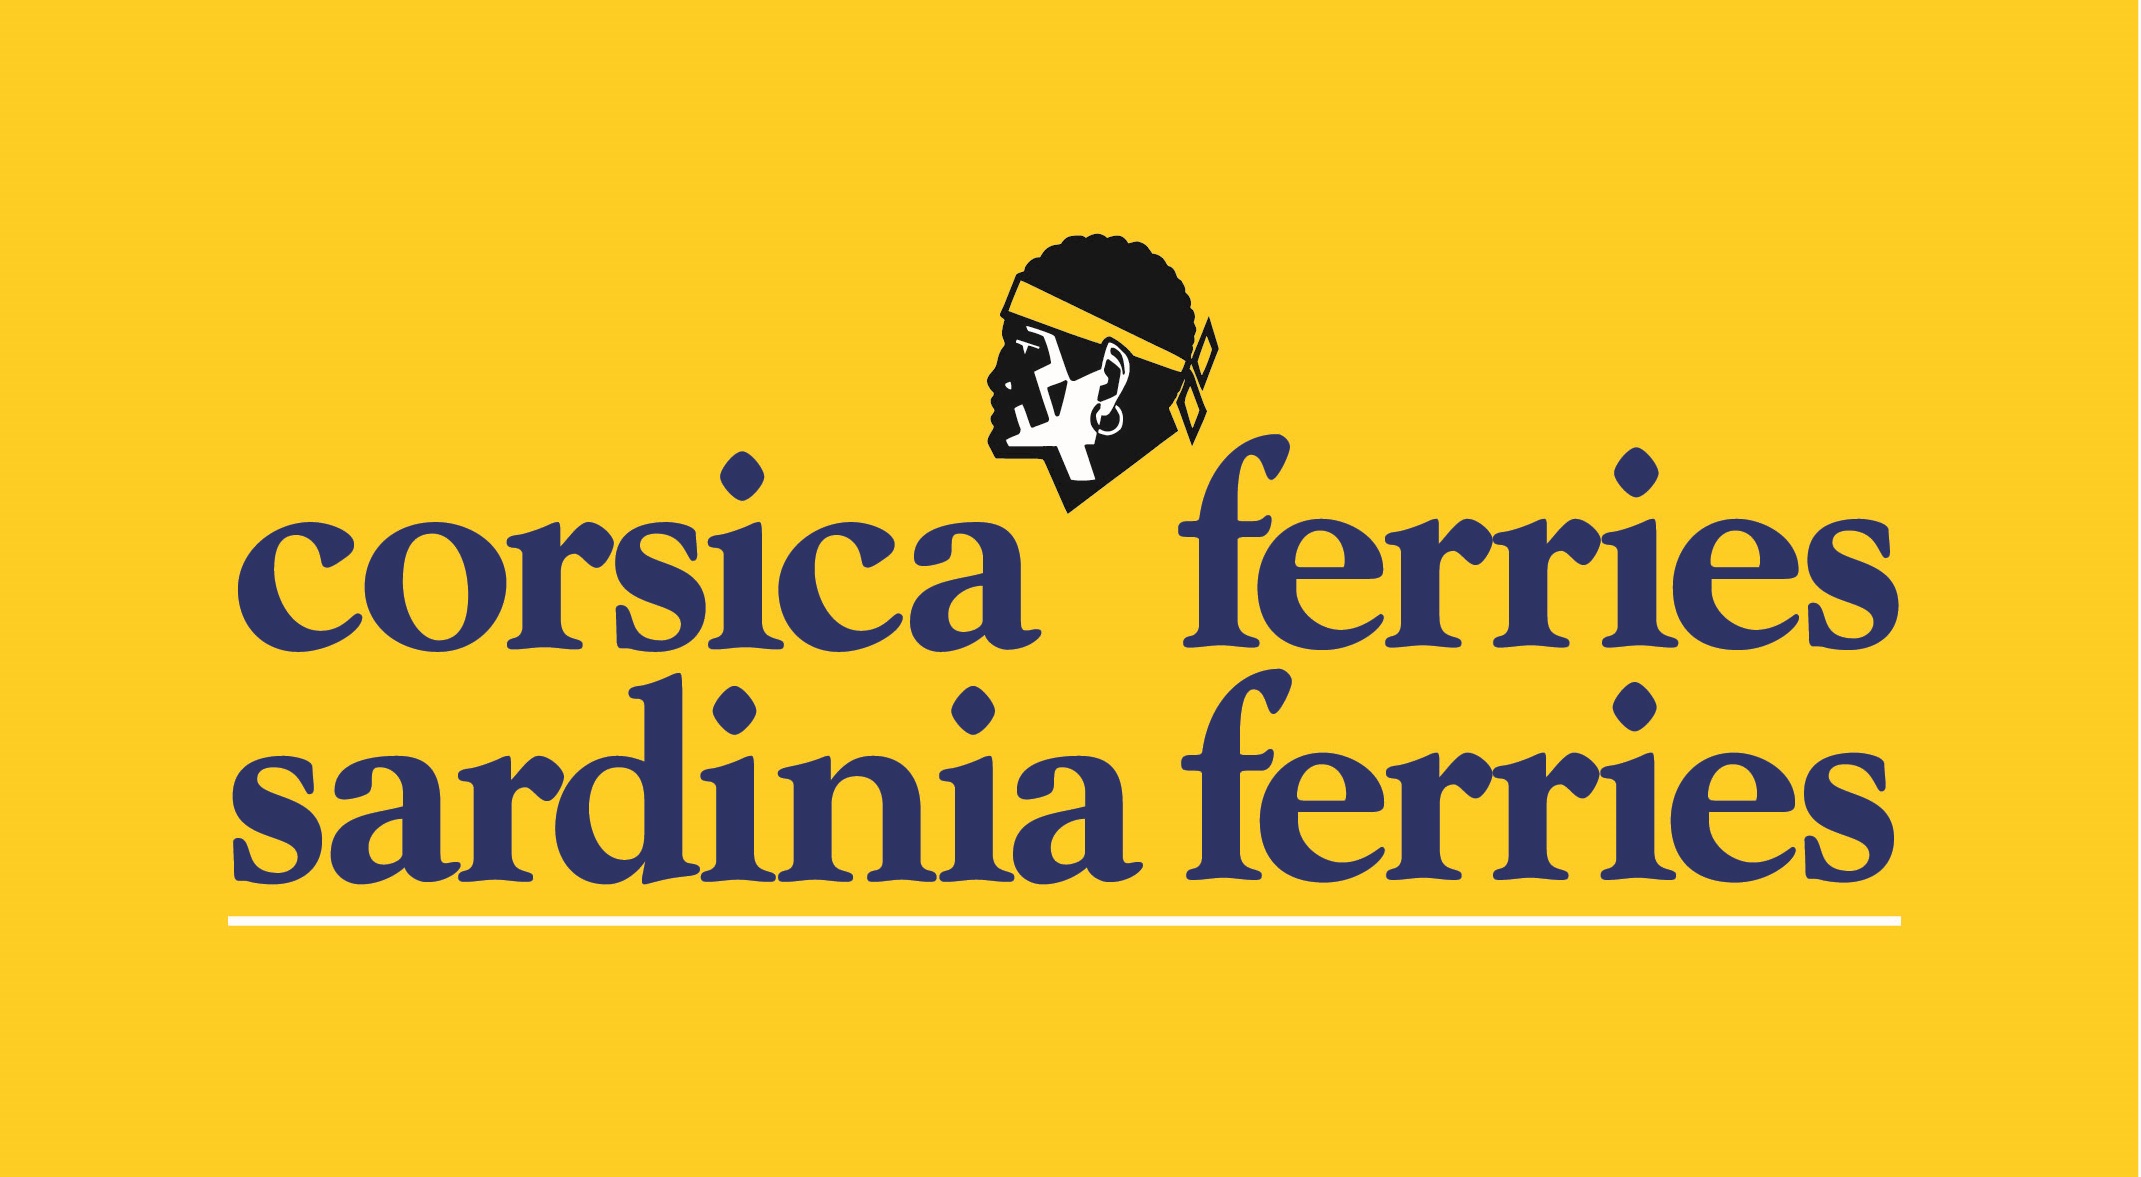 Corsica Sardinia Ferries logo2021